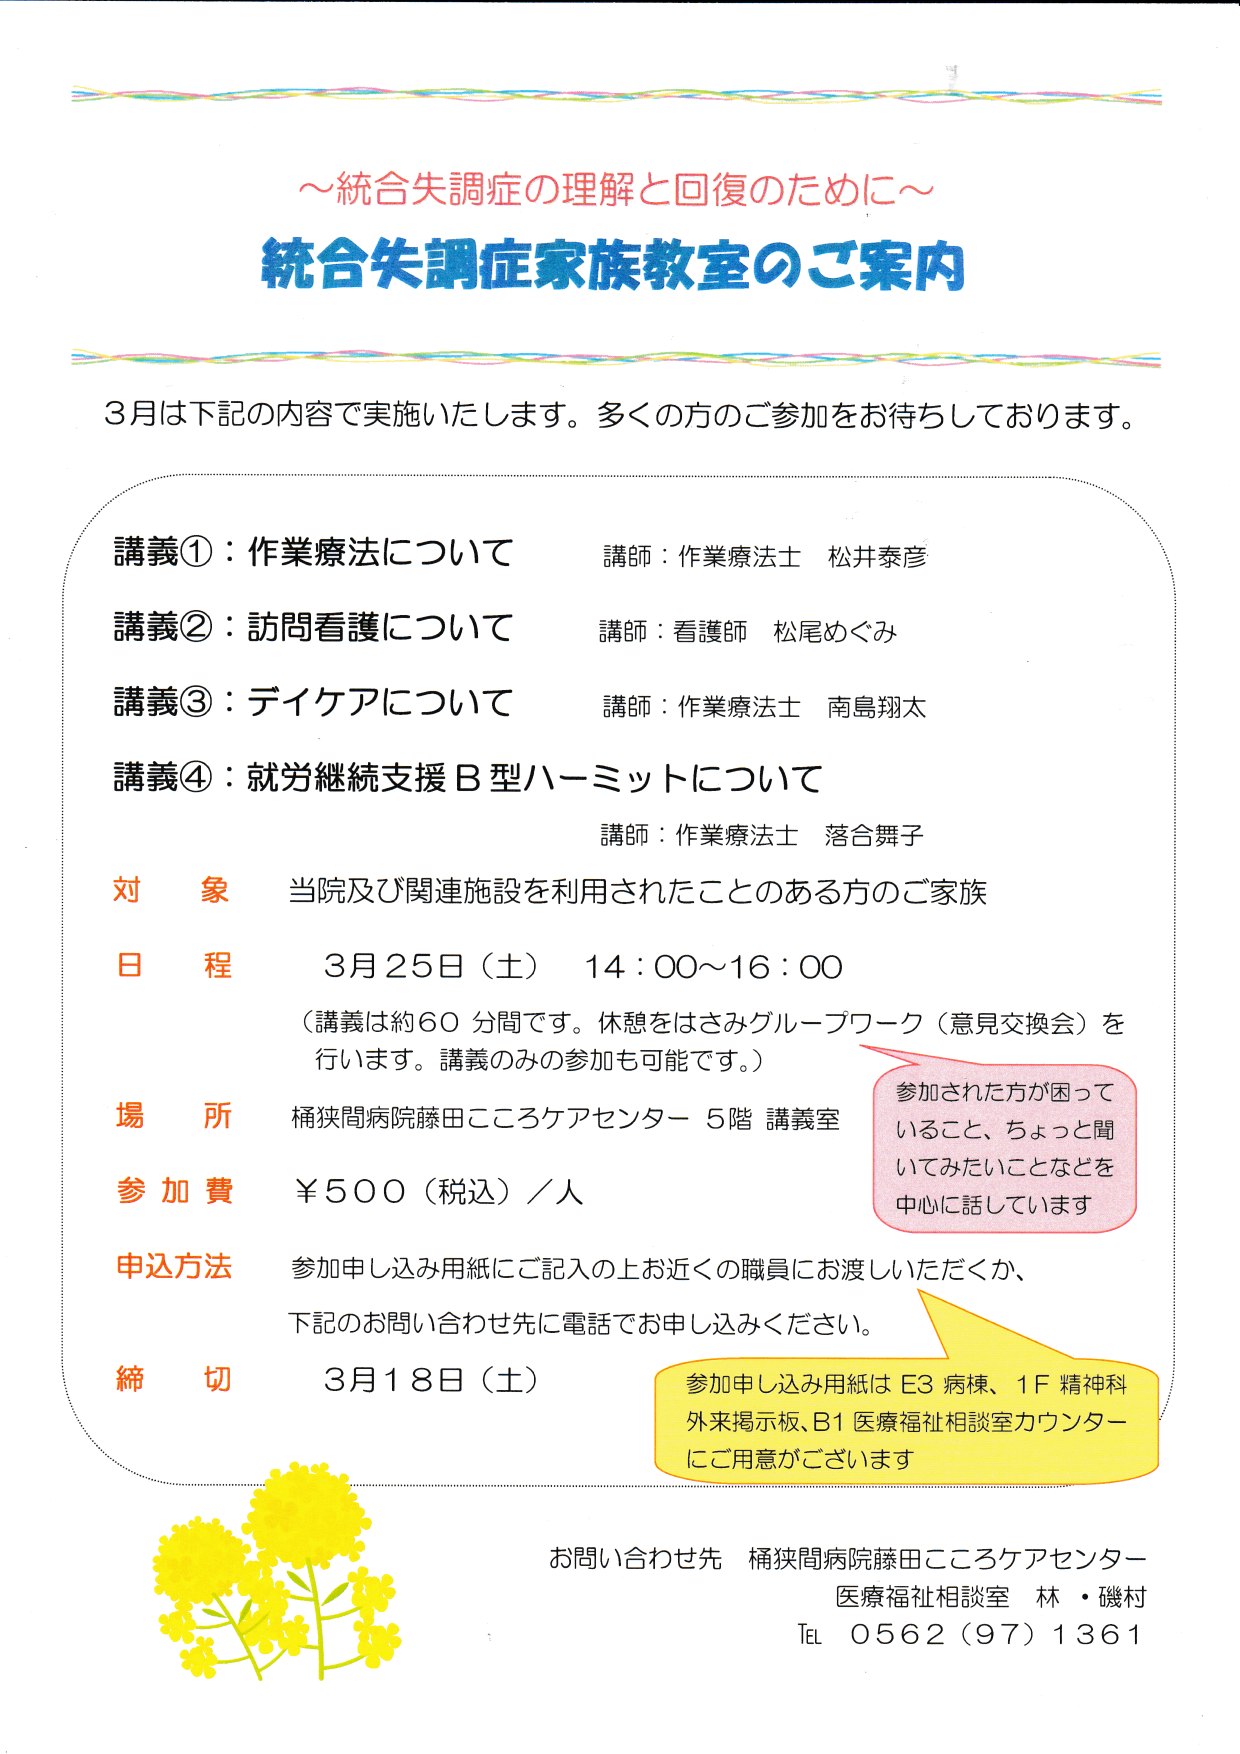 http://www.seishinkai-kokoro.jp/news/2017-3S%E5%AE%B6%E6%97%8F%E6%95%99%E5%AE%A4.jpg